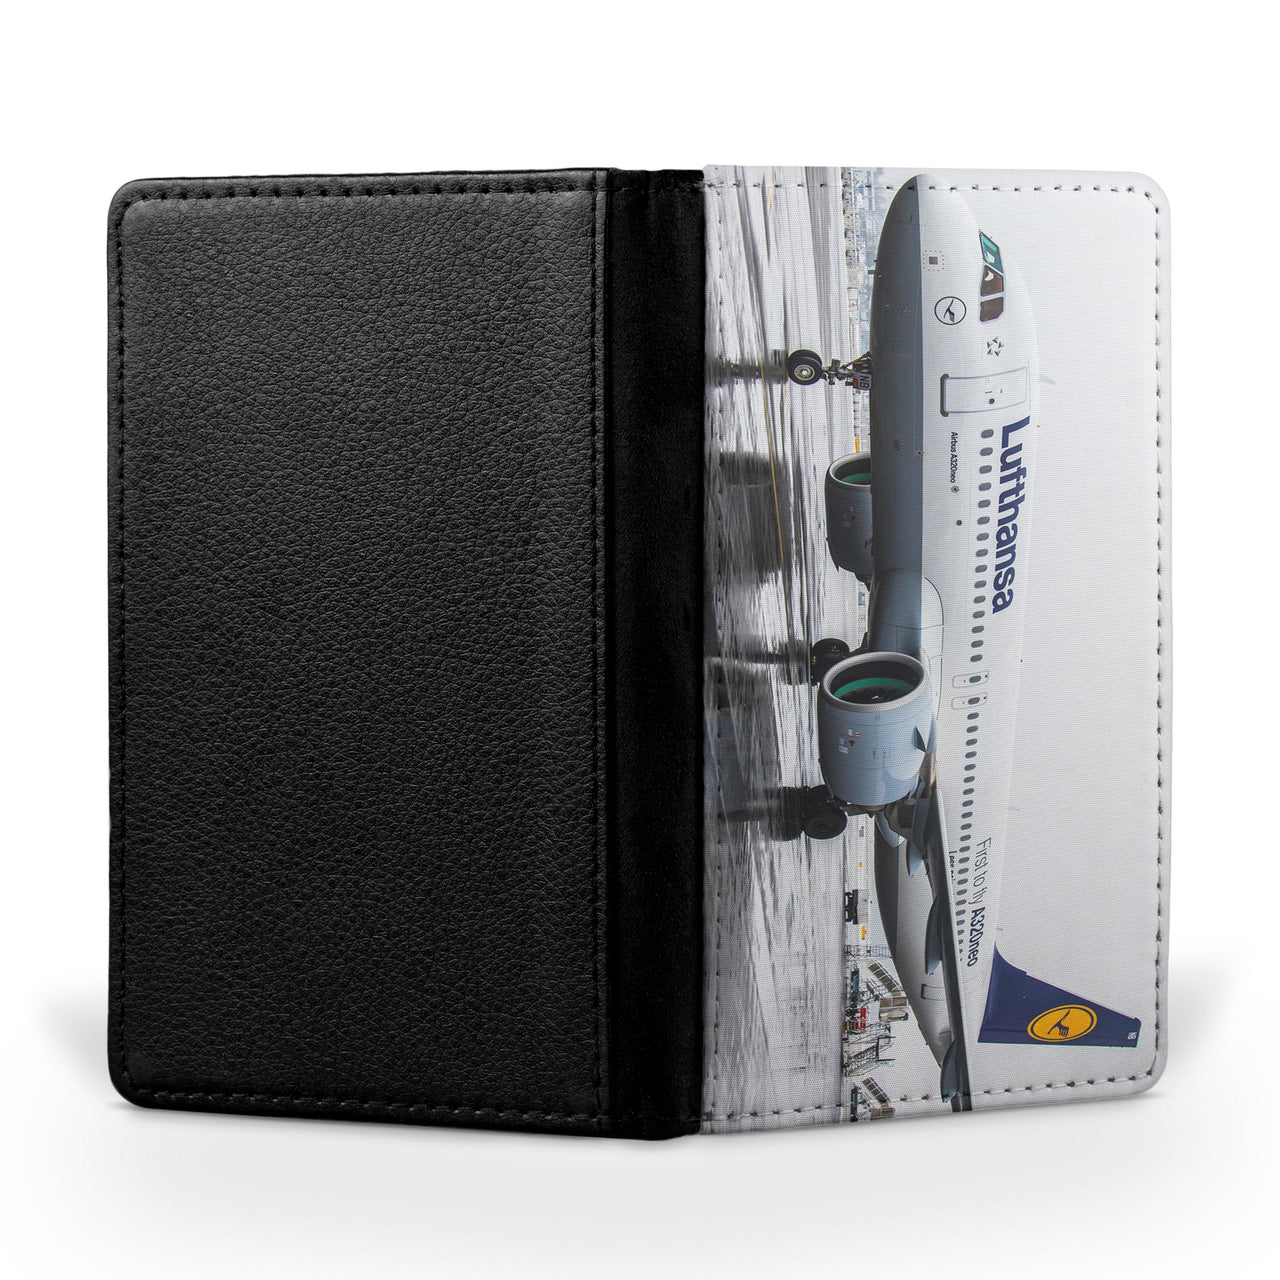 Lufthansa's A320 Neo Printed Passport & Travel Cases